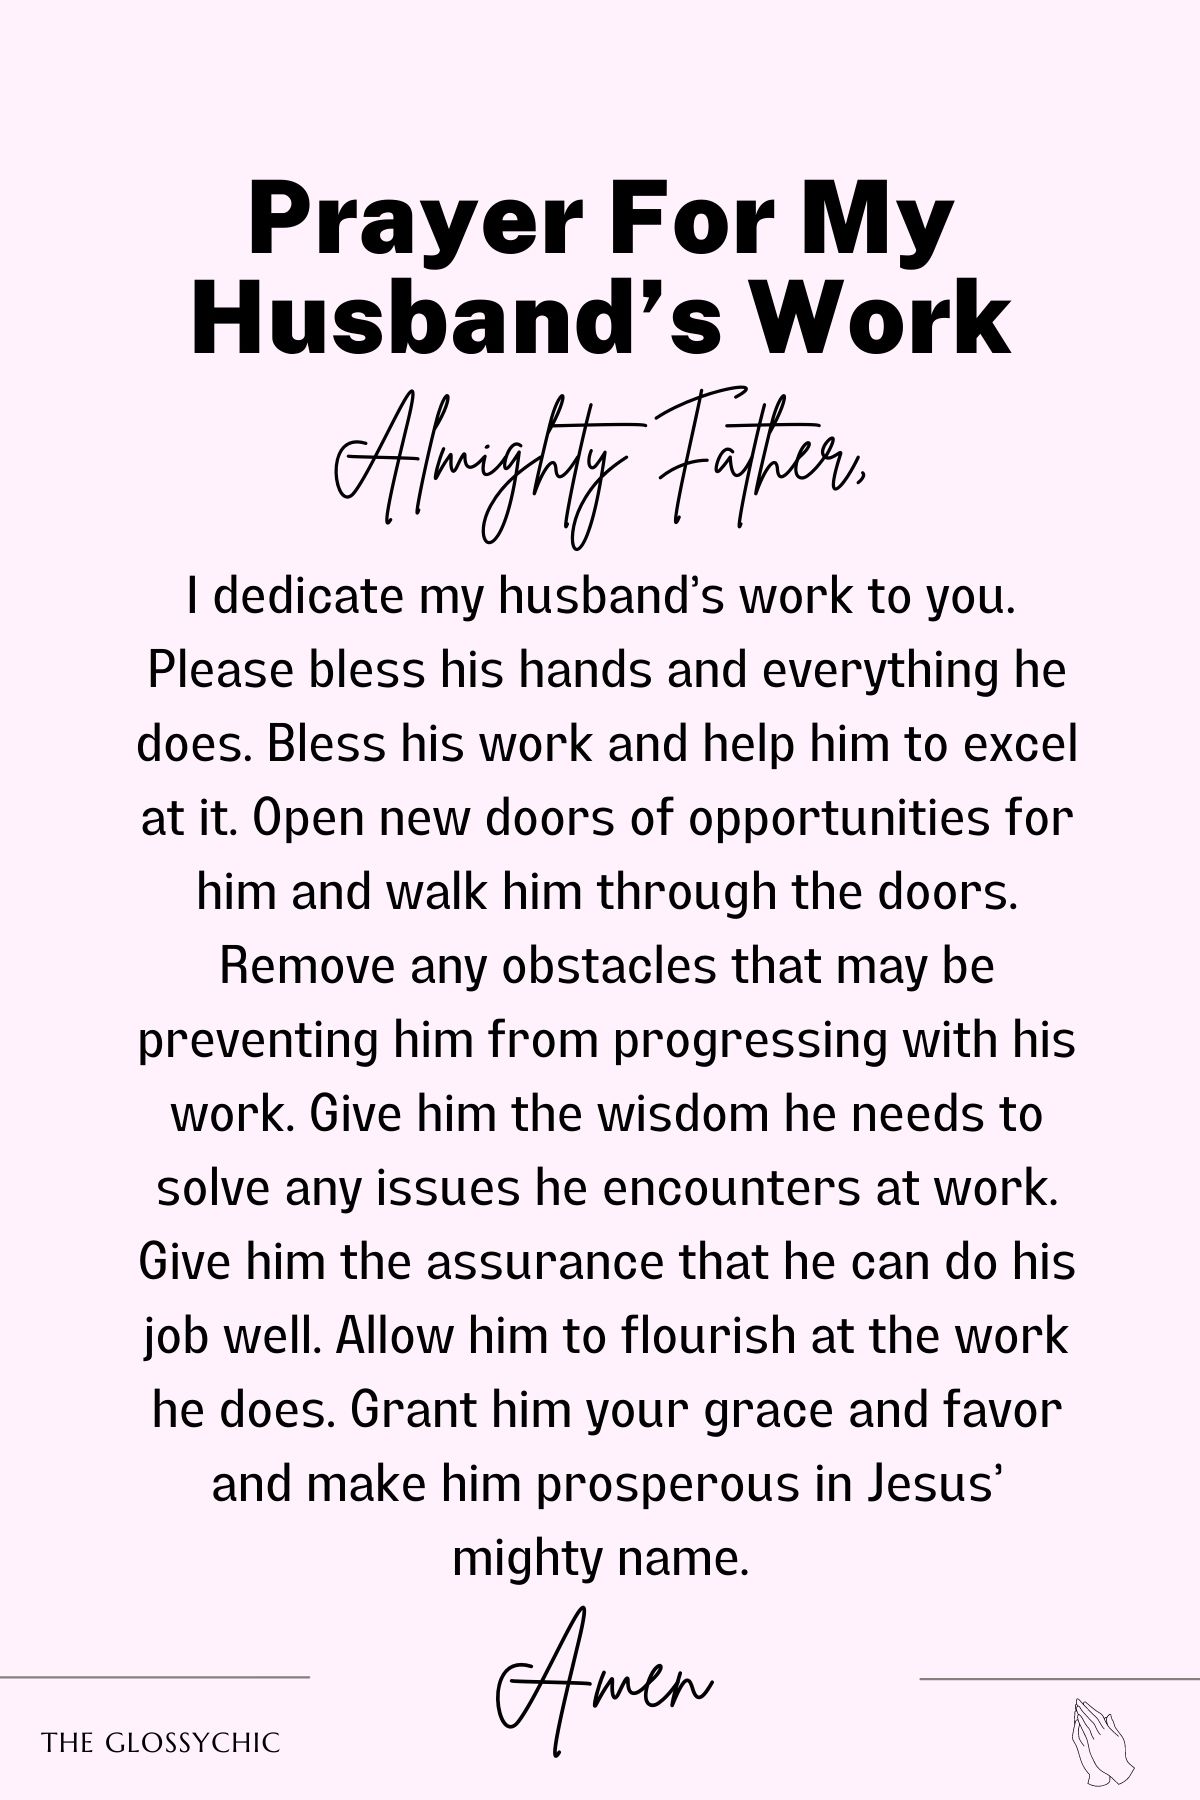 Prayer for my husband’s work